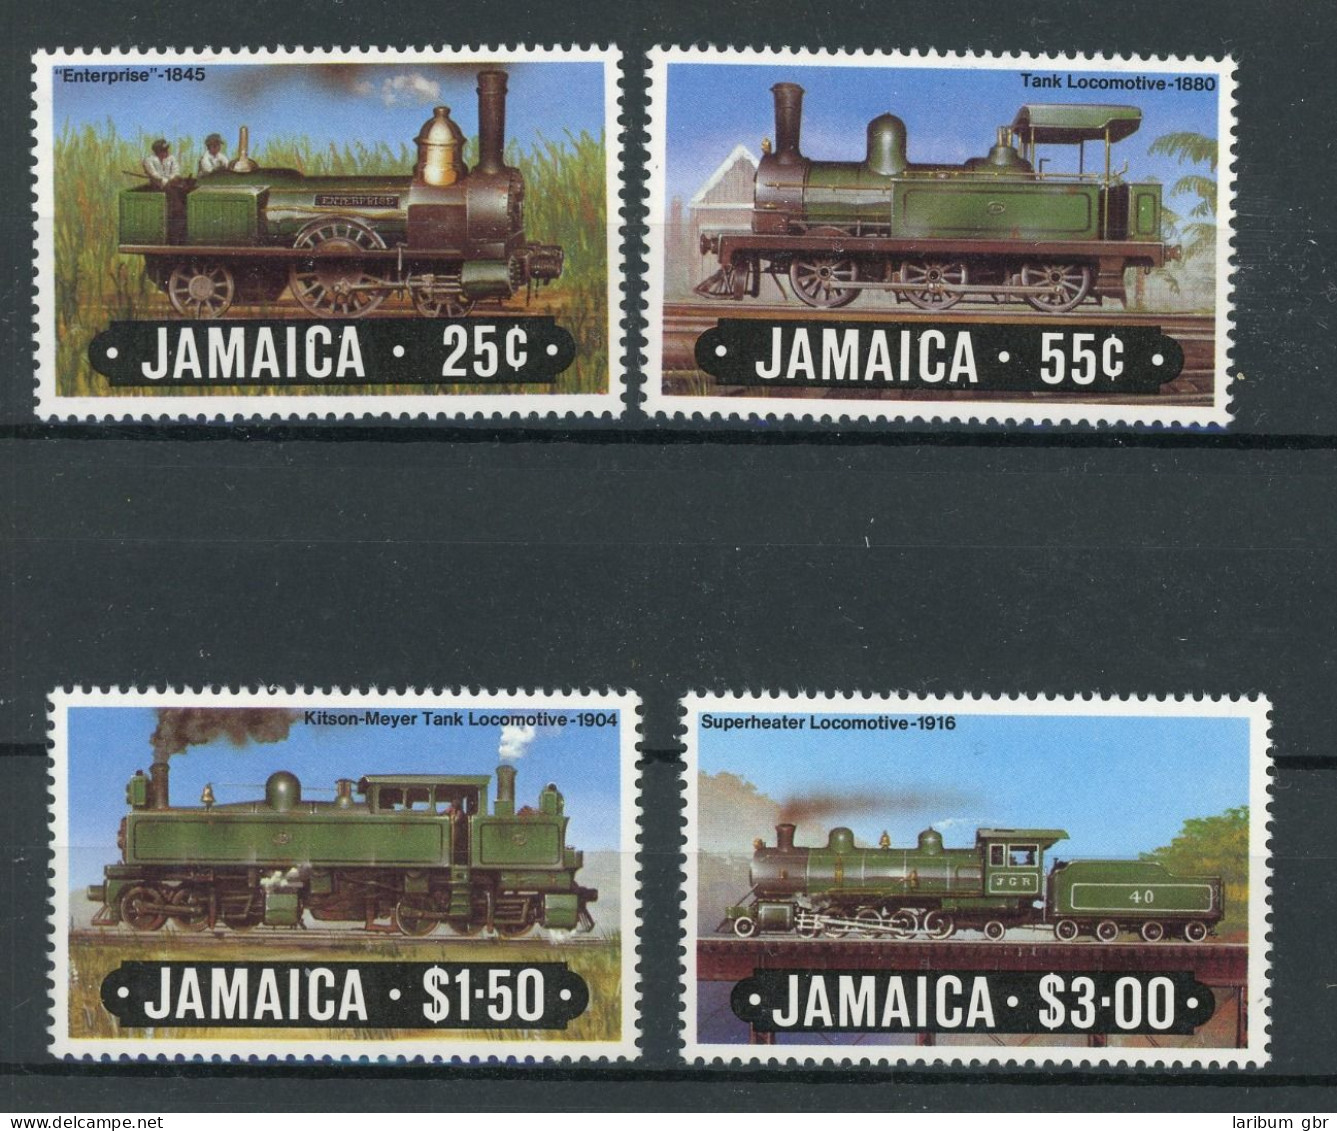 Jamaika 595-598 Postfrisch Eisenbahn #IX265 - Jamaica (1962-...)